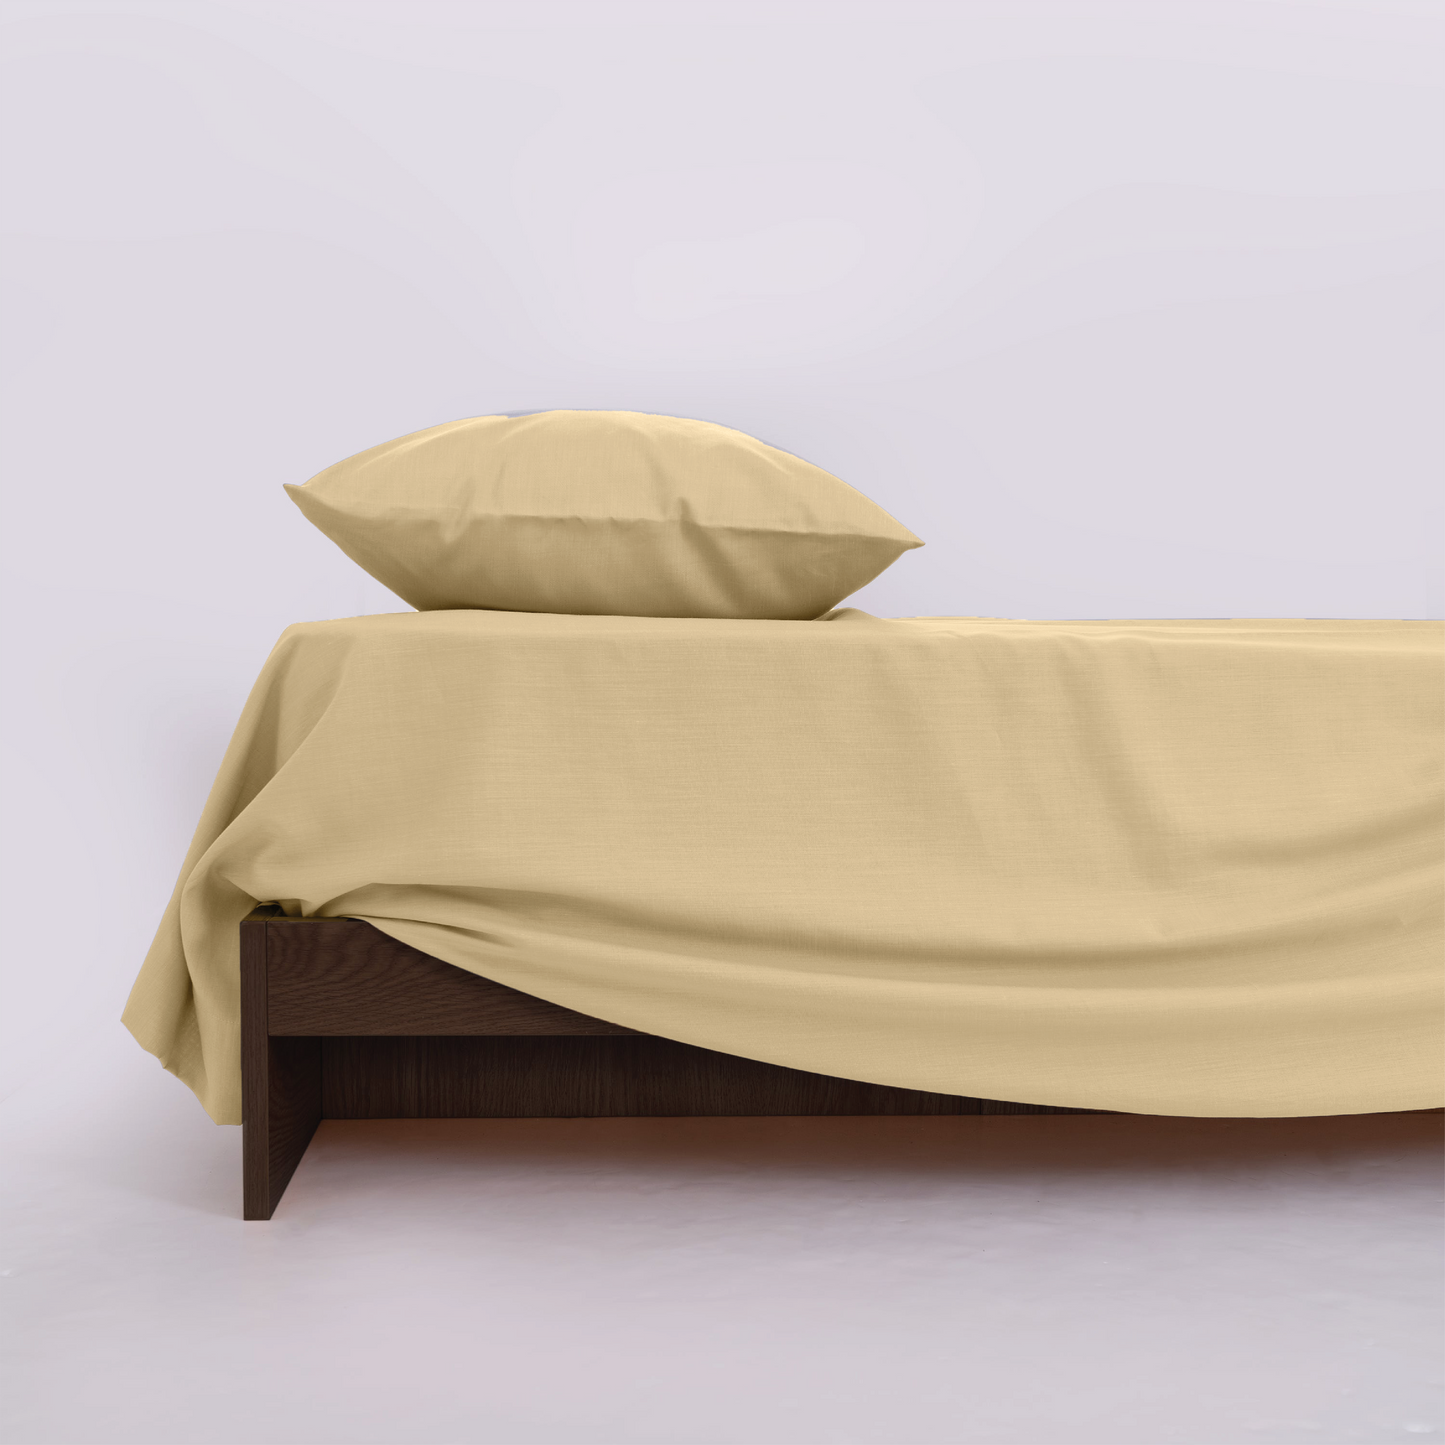 Flat bed sheet set - multiple sizes - BD27